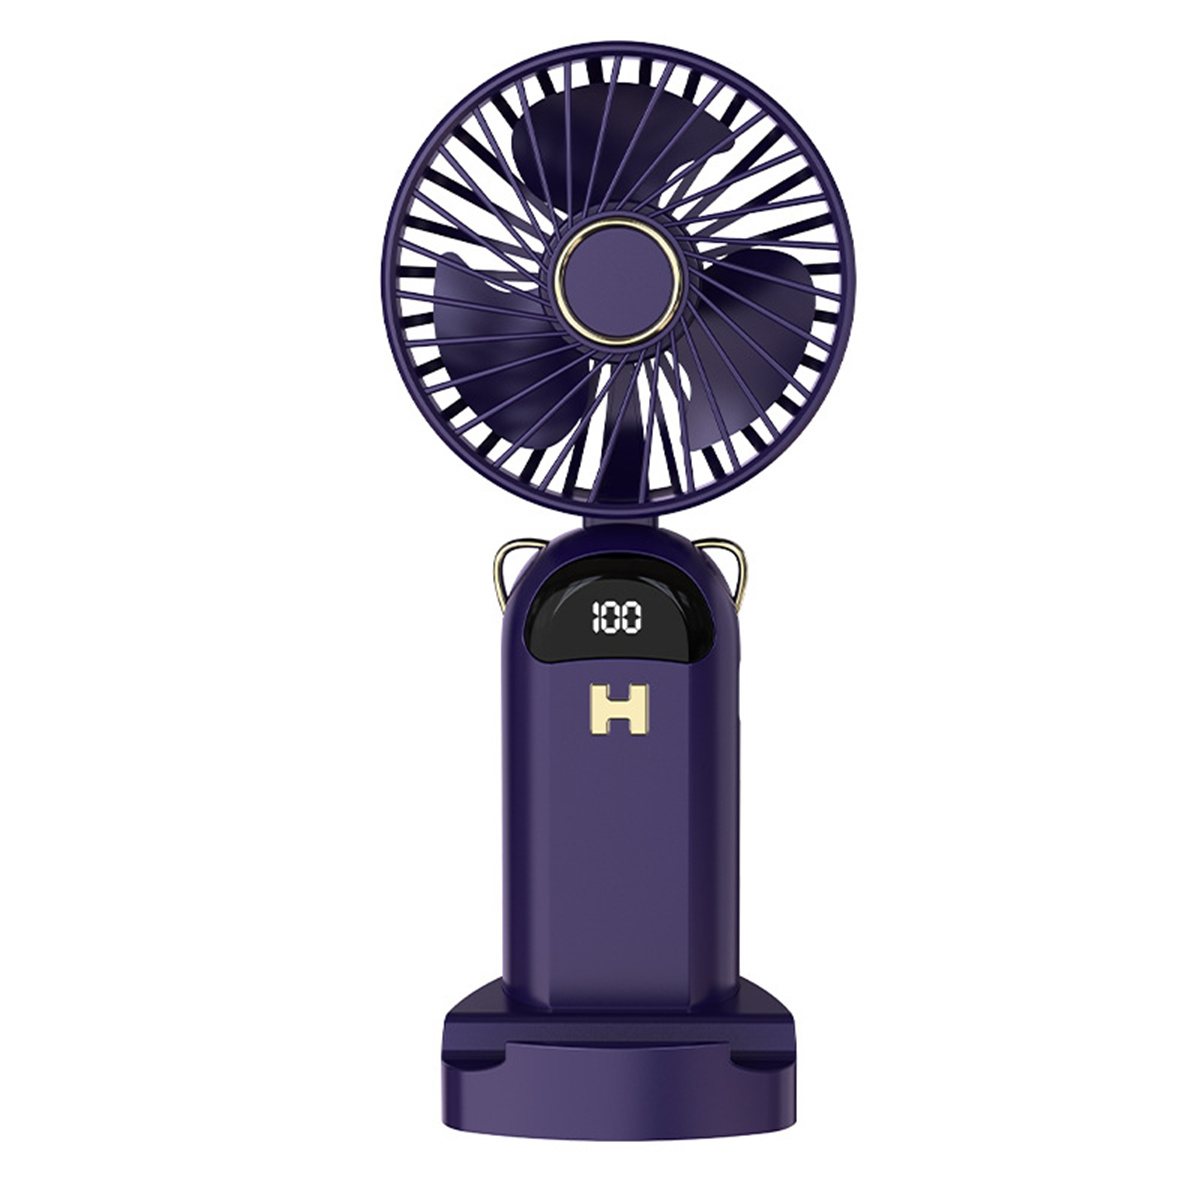 SYNTEK Fan Fan digitale tragbar Lila lila wiederaufladbare Aromatherapie USB Hals Desktop kleine Ventilator